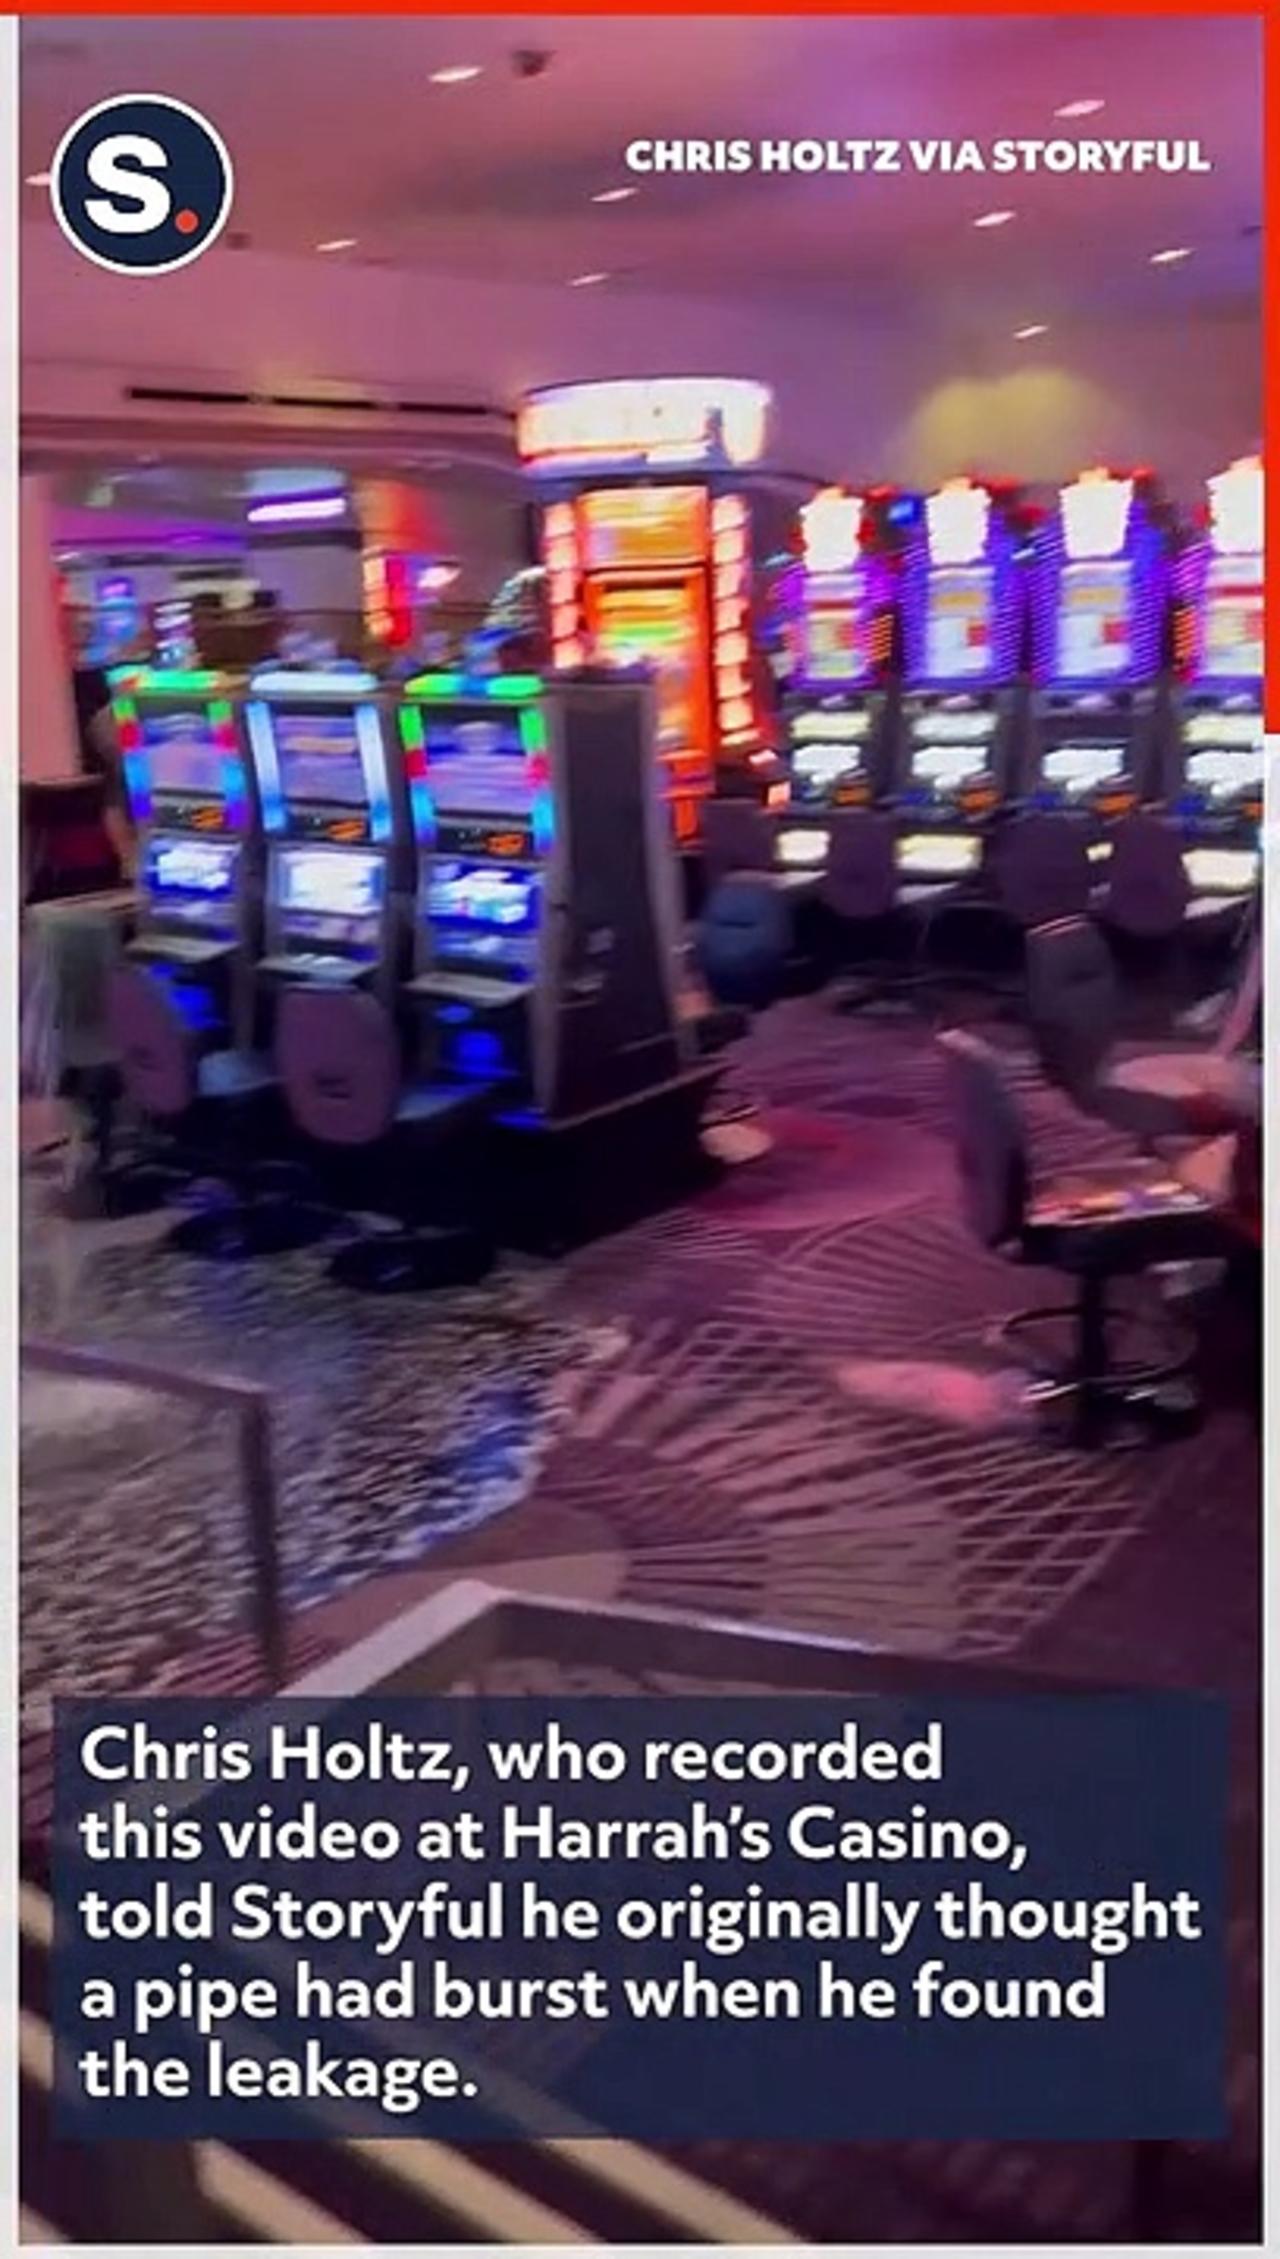 Rainwater Leaks Through Casino Ceiling as Flash Flooding Hits Las Vegas